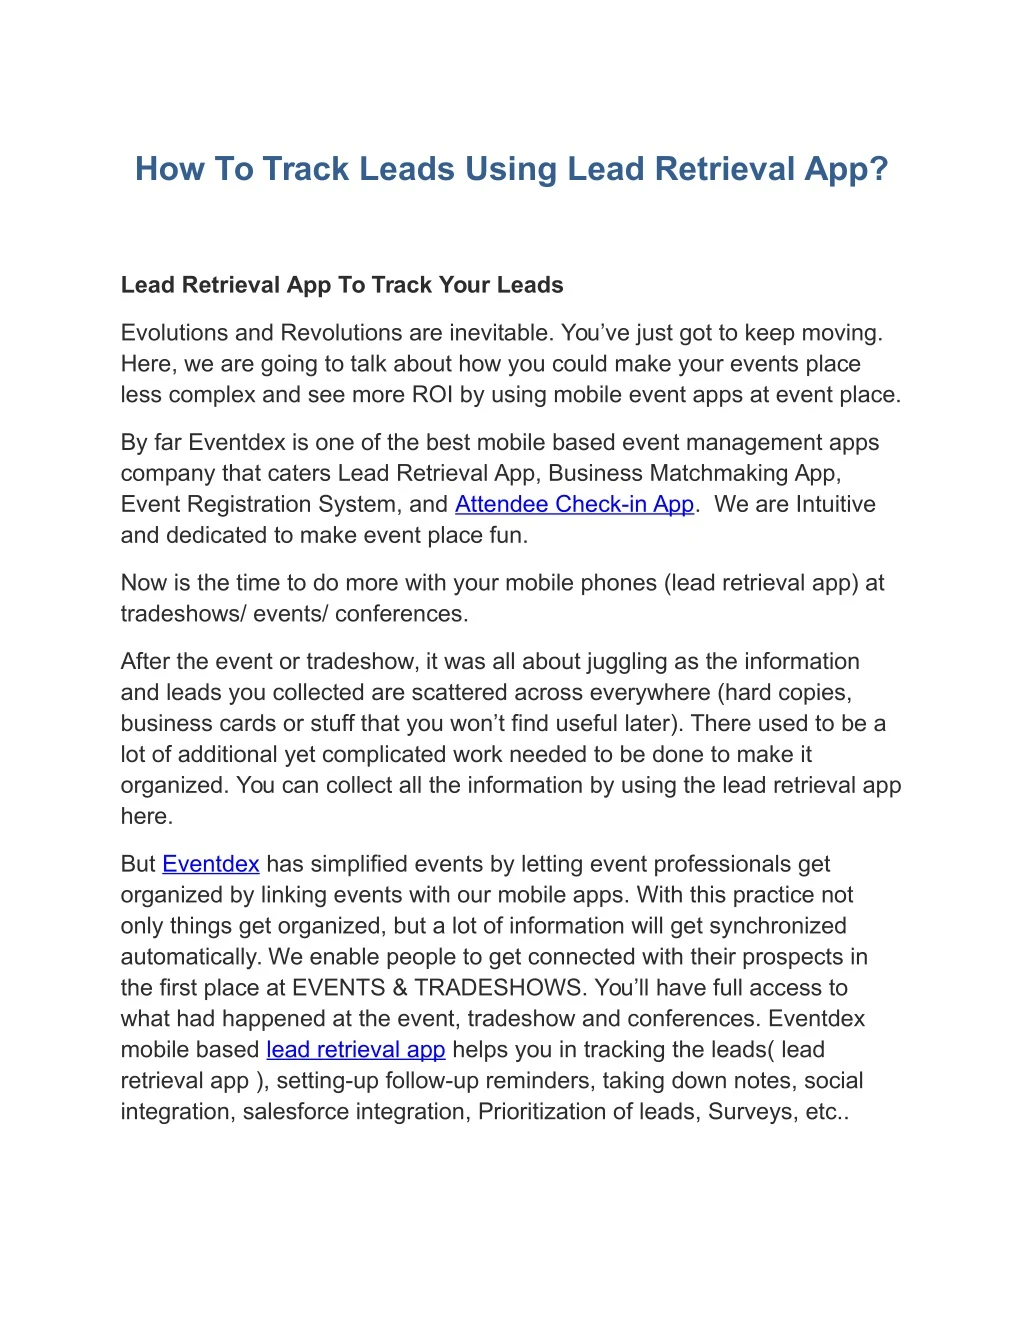 how to track leads using lead retrieval app